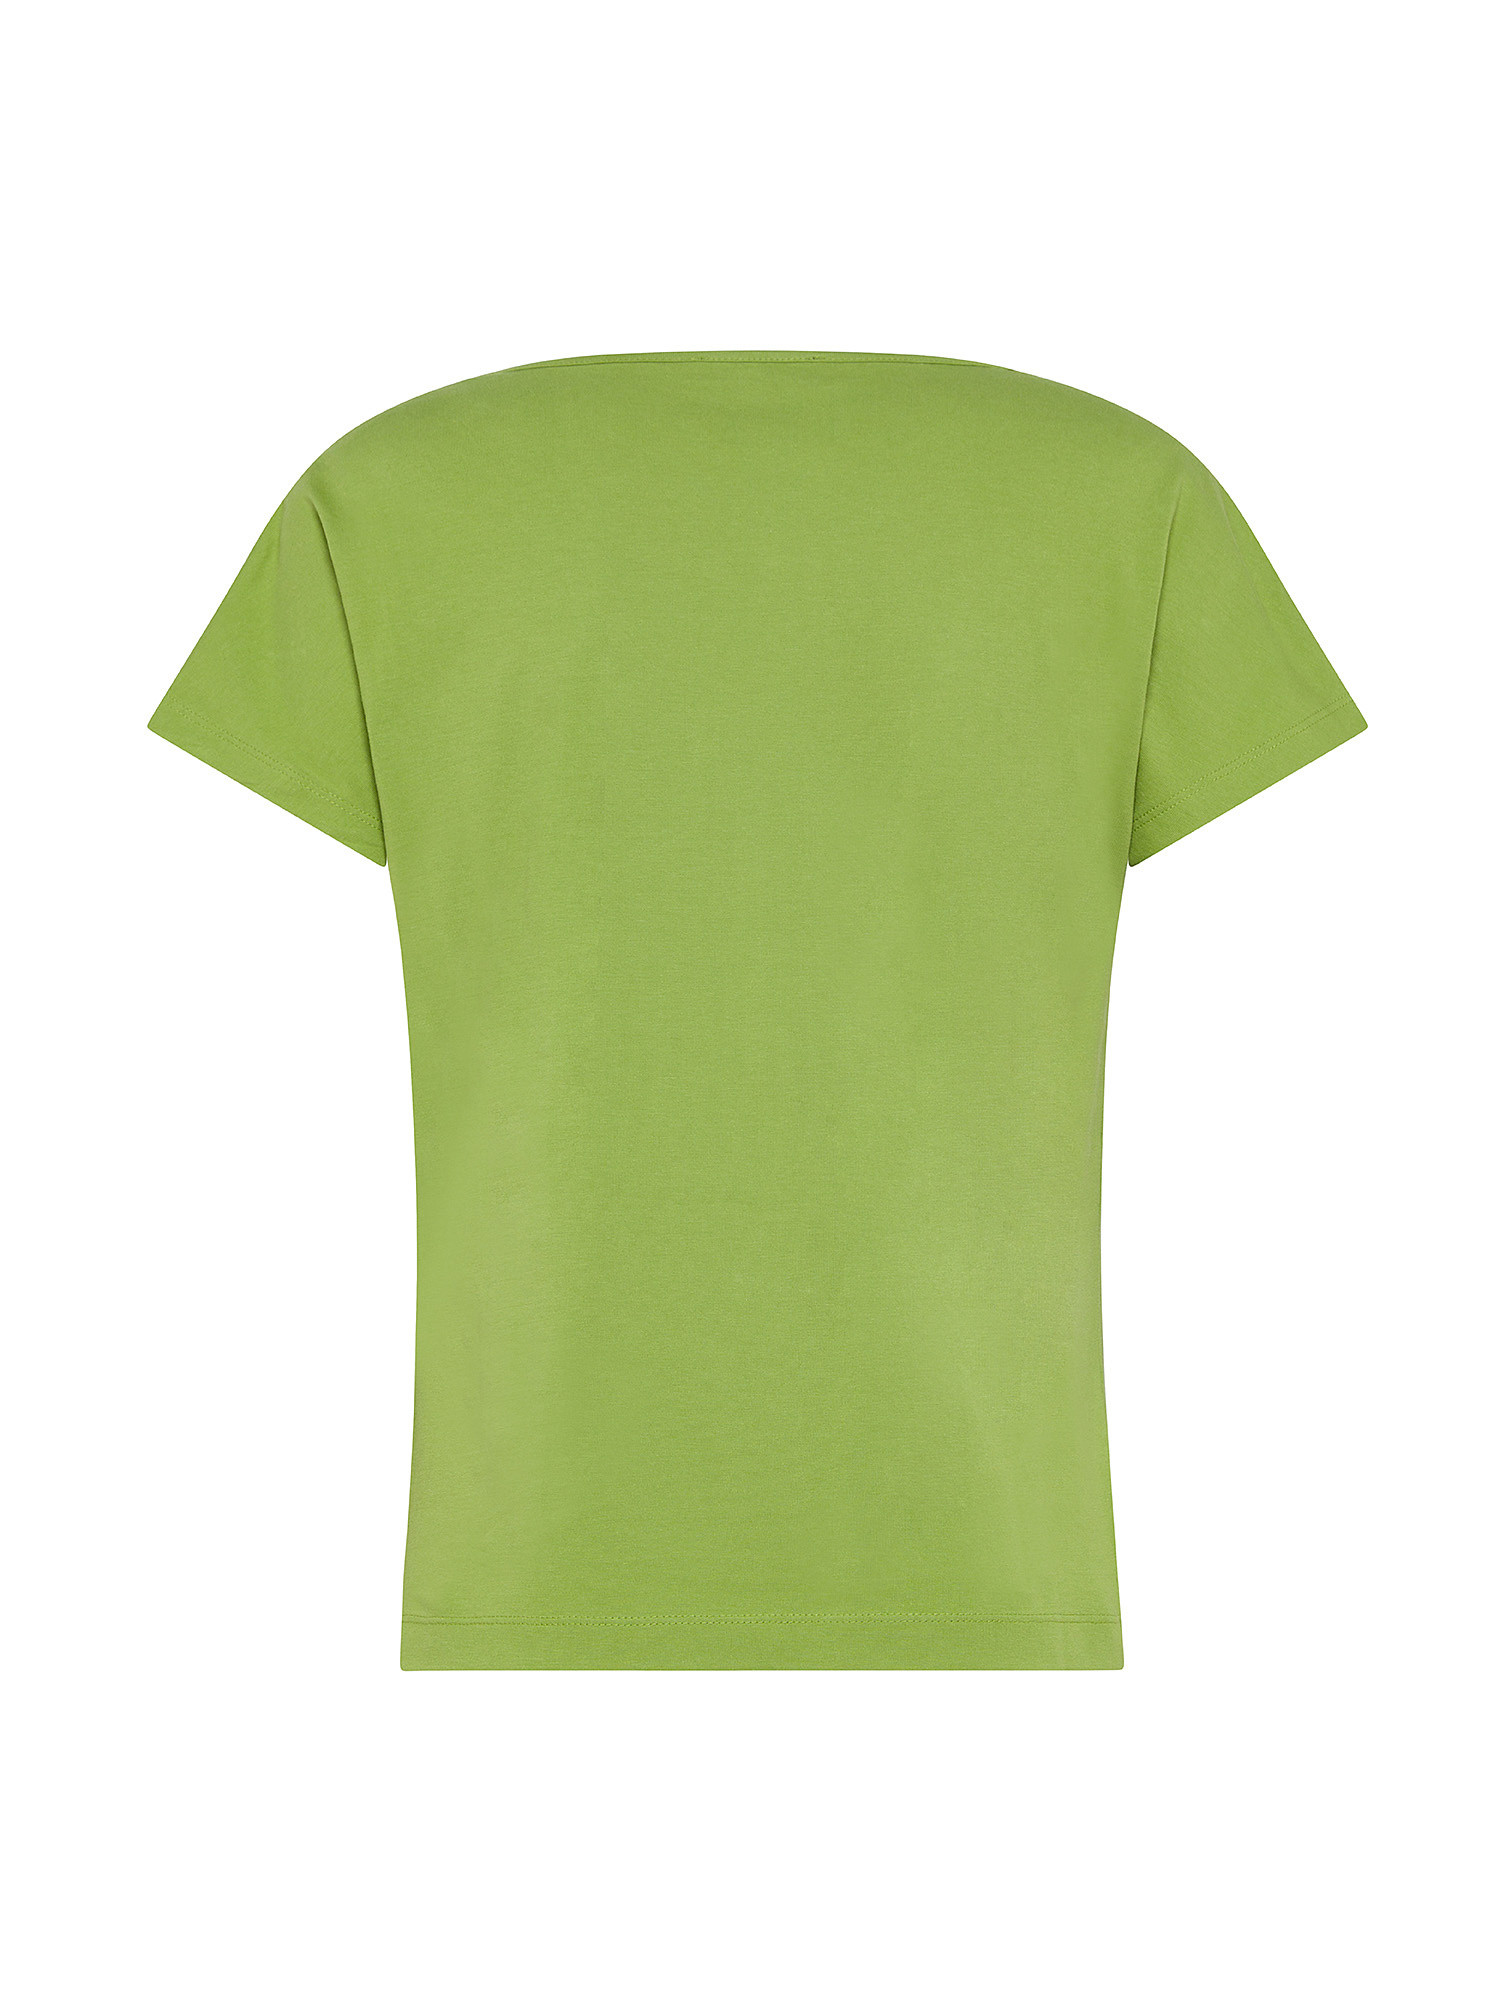 Koan - T-shirt con ricamo, Verde, large image number 1